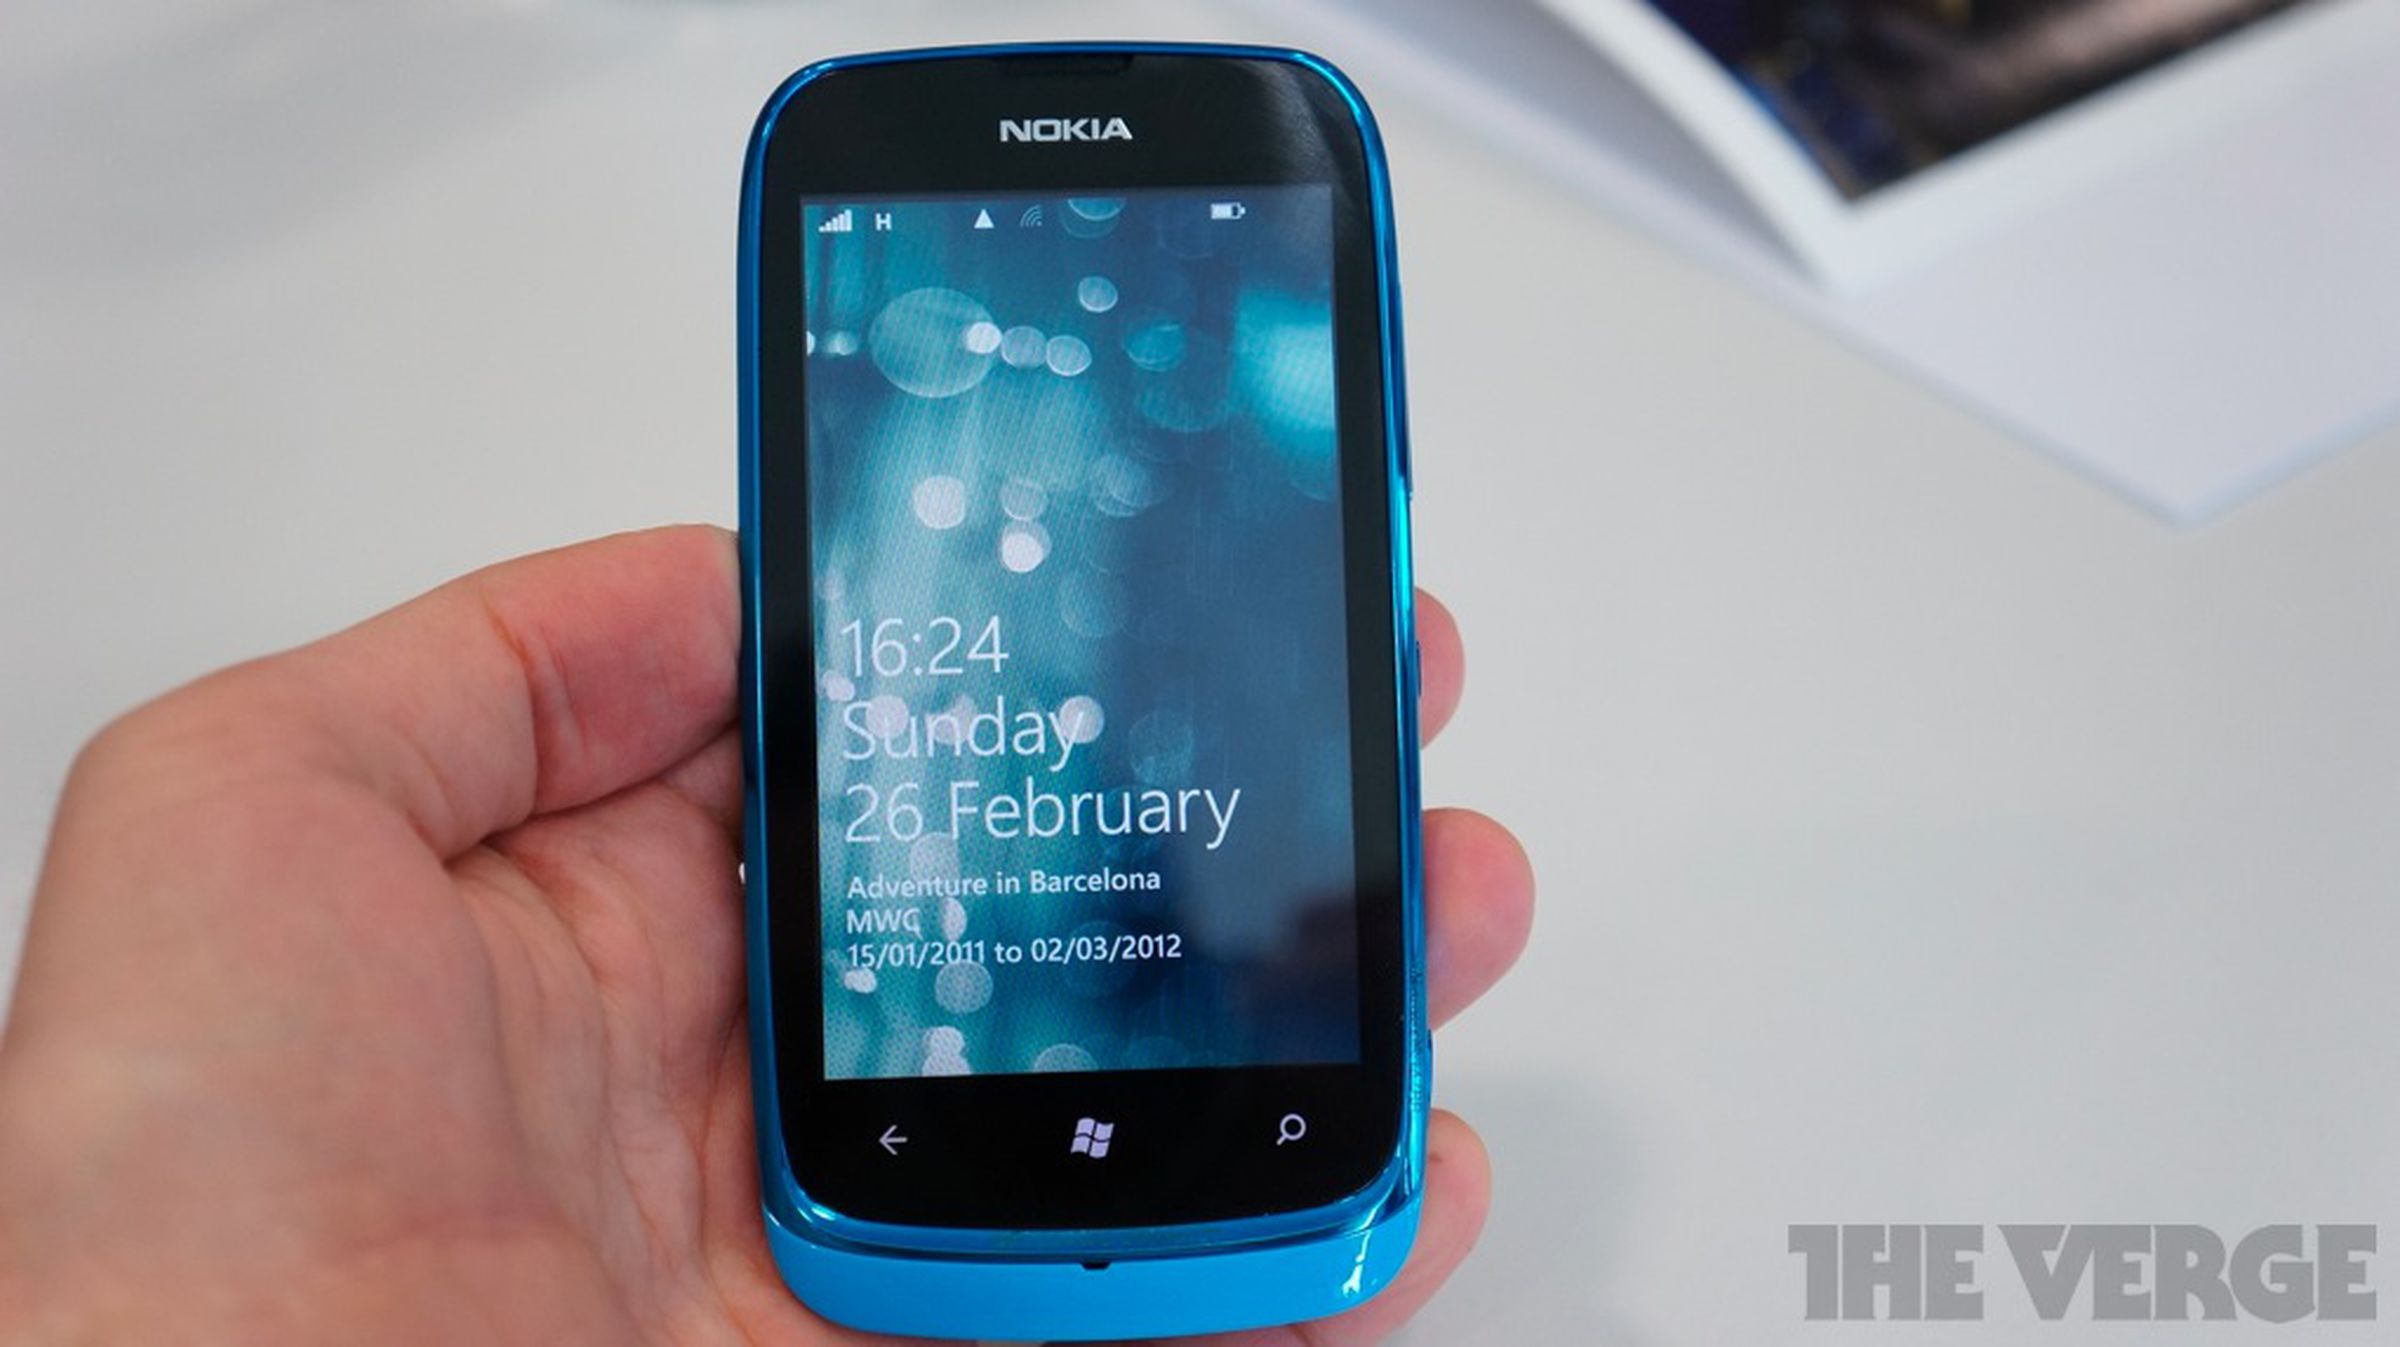 Nokia Lumia 610 hands-on photos